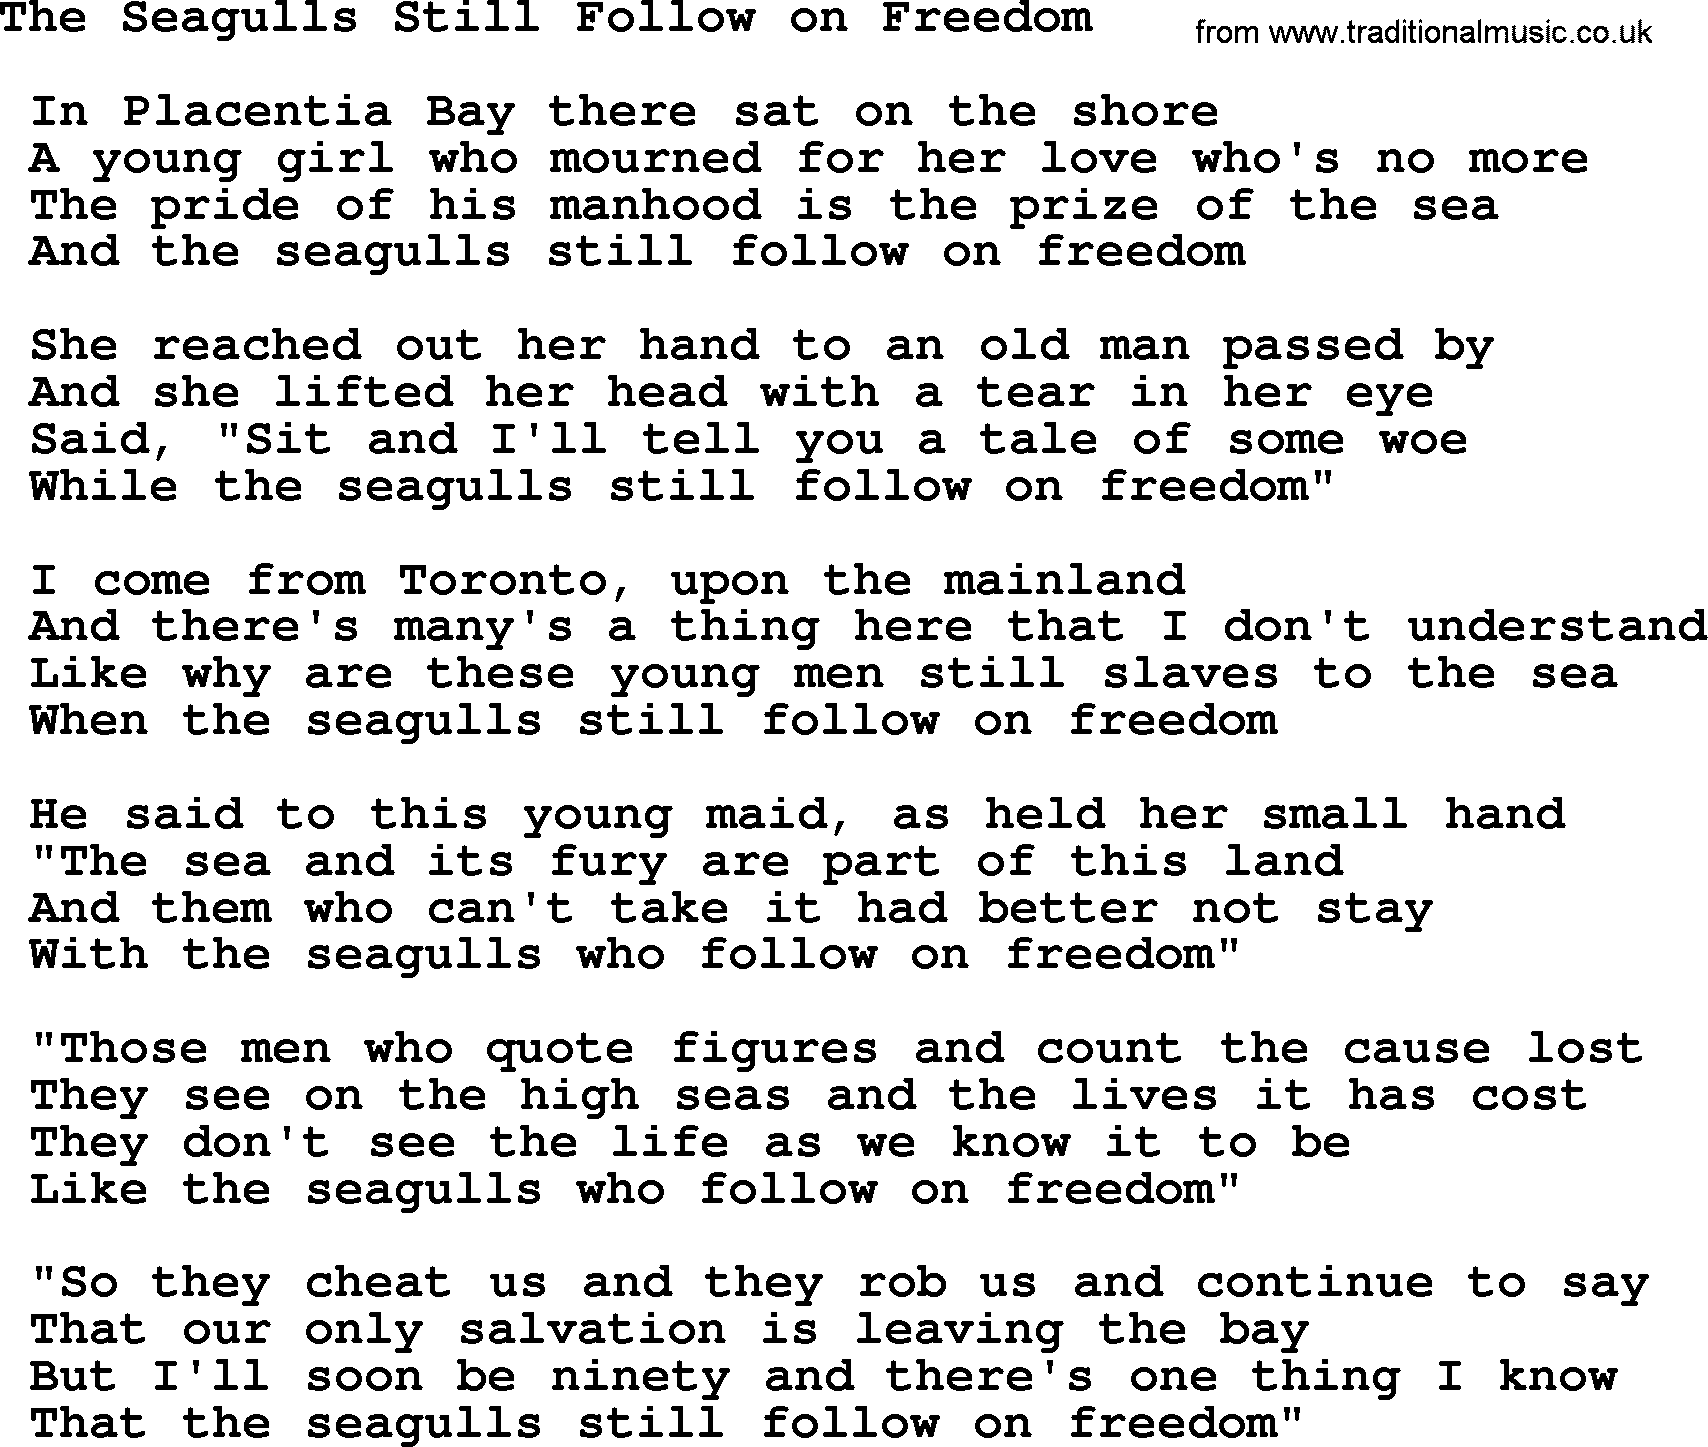 Sea Song or Shantie: The Seagulls Still Follow On Freedom, lyrics